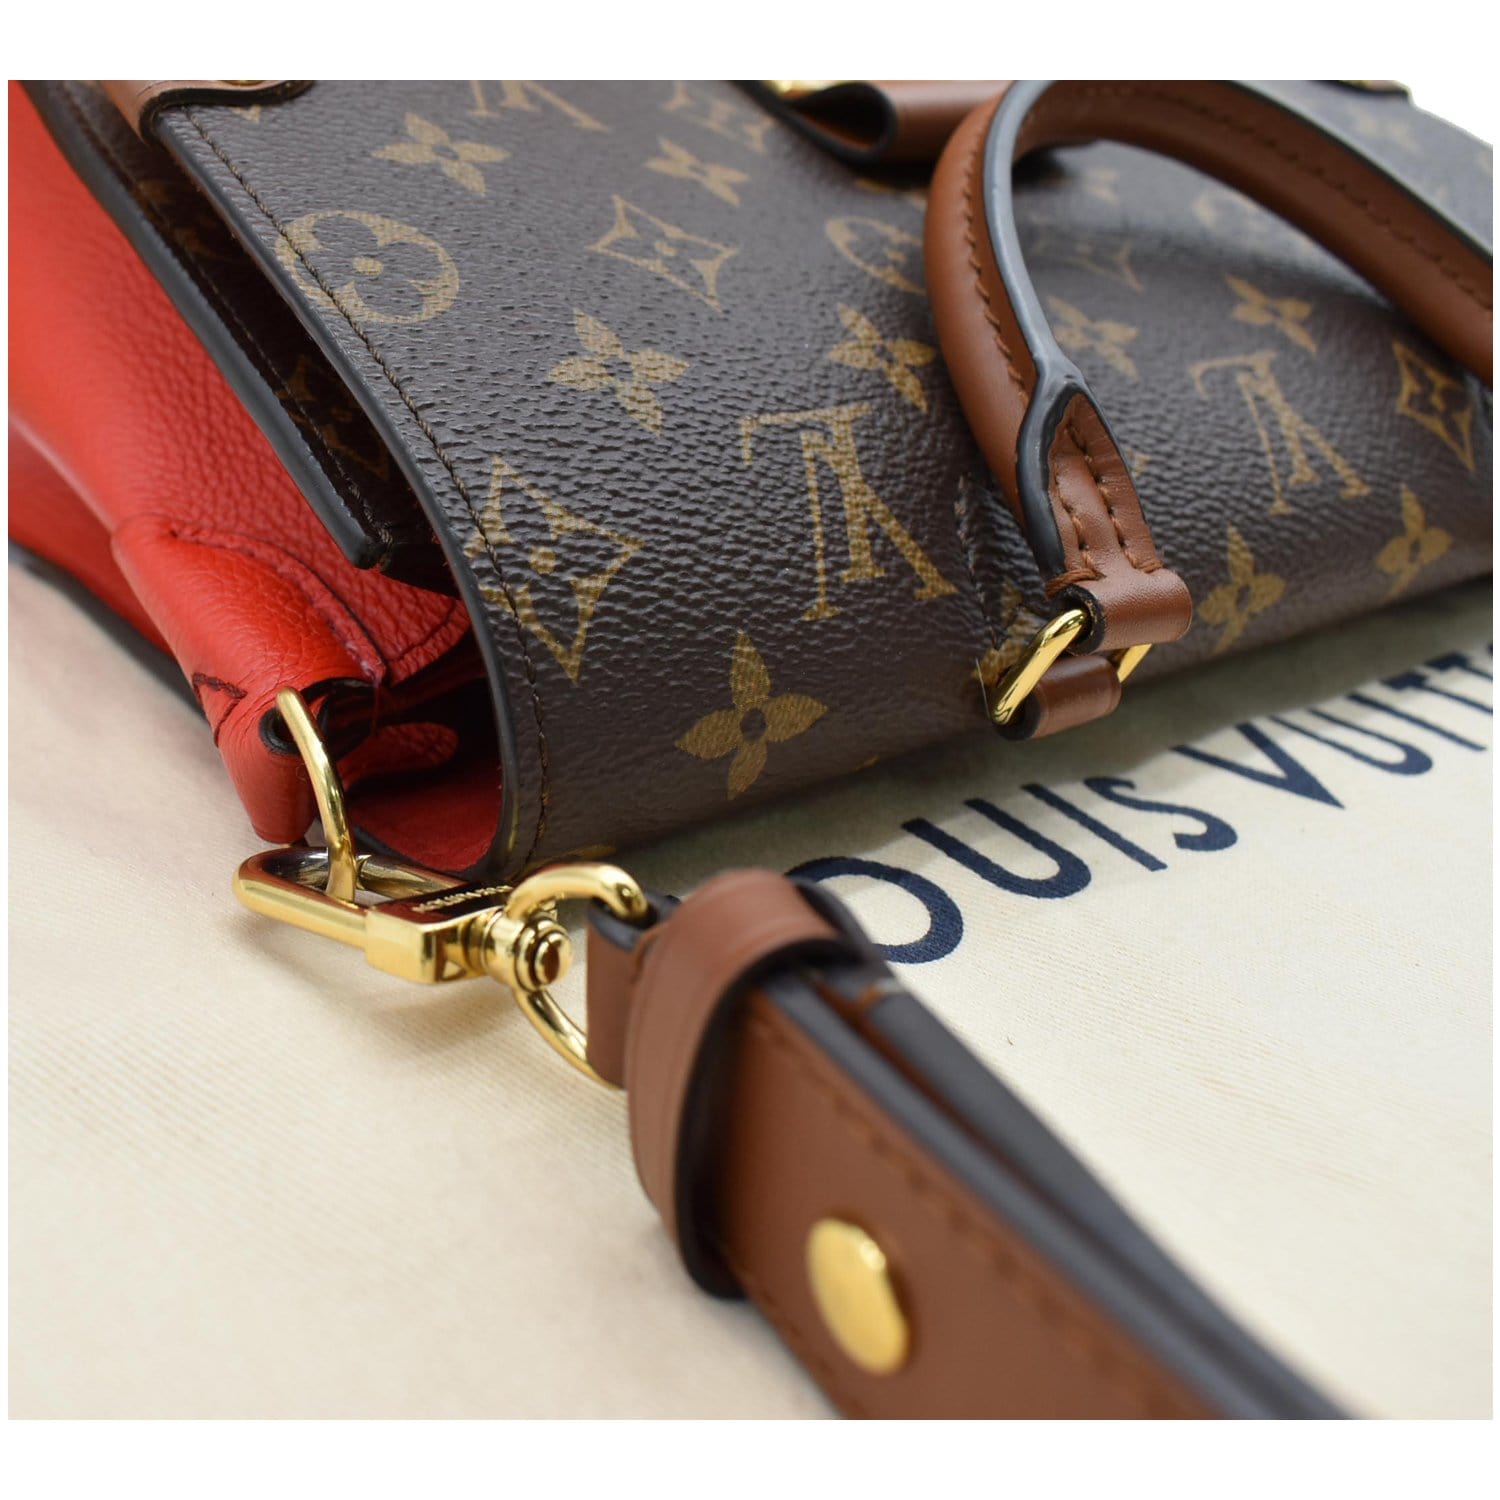 Louis Vuitton 2020 Monogram Vaugirard - Red Handle Bags, Handbags